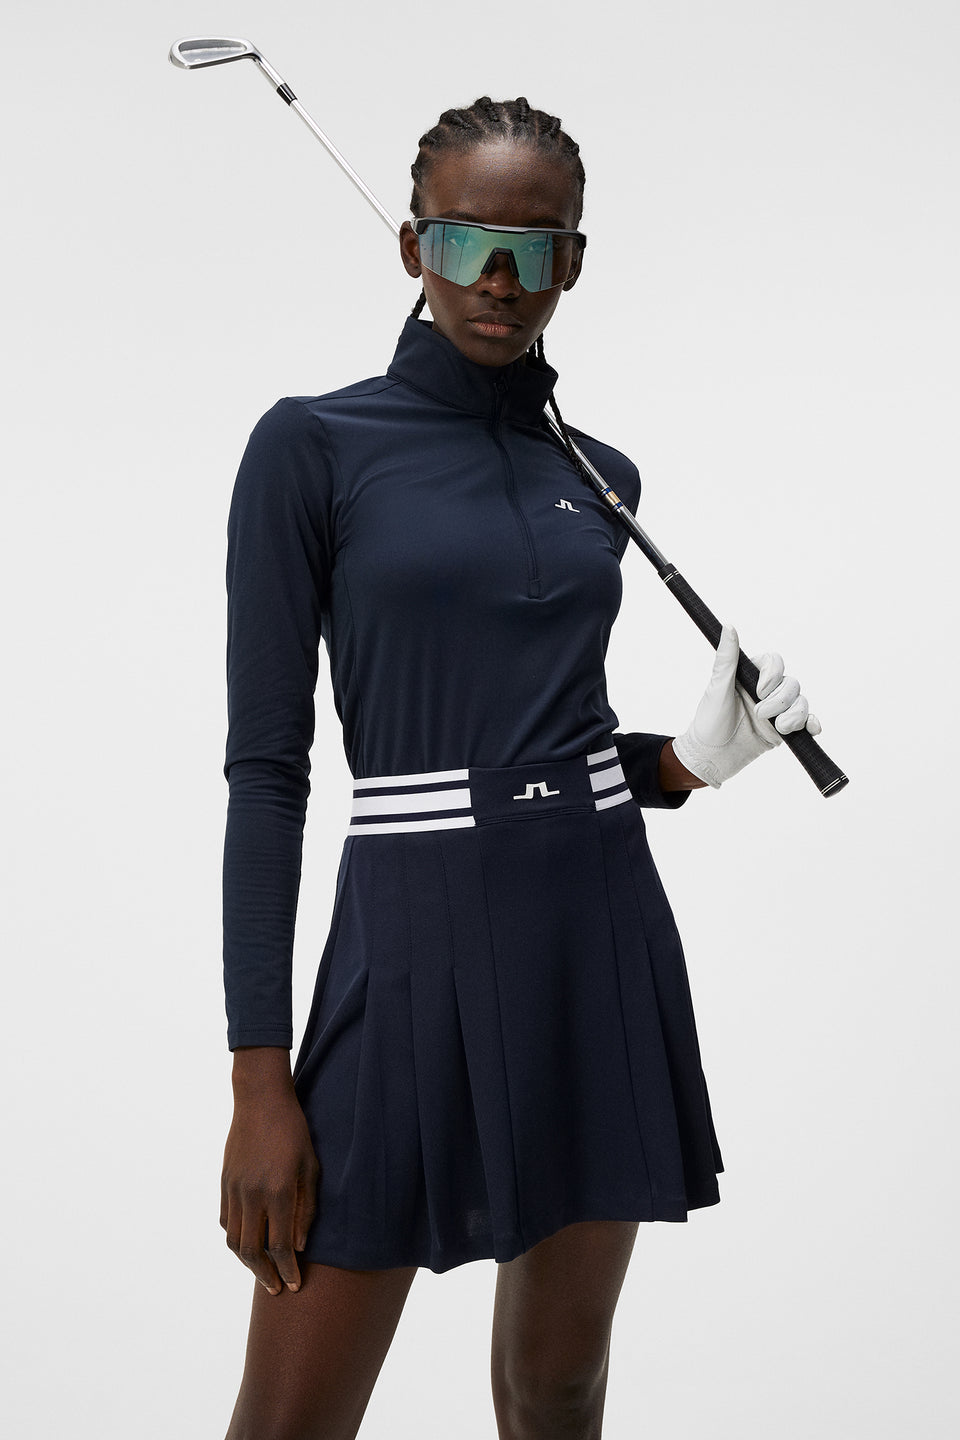 Modern Golf Clothing for Women - J.Lindeberg